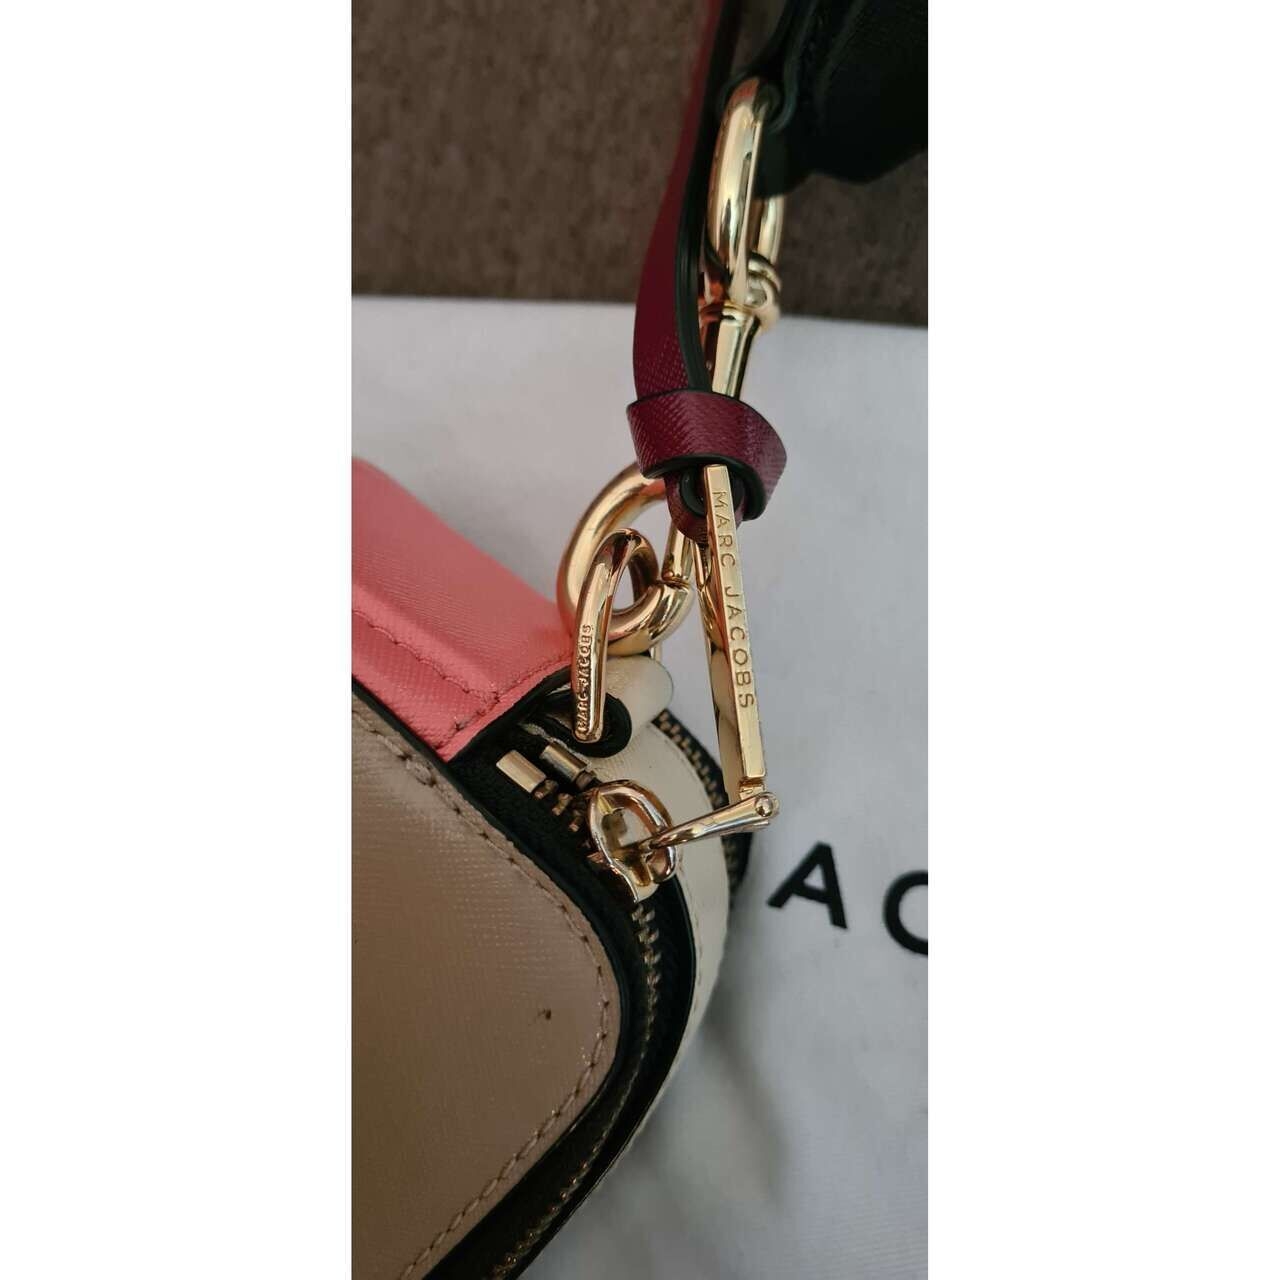 Marc Jacobs Snapshot Beige GHW Sling Bag